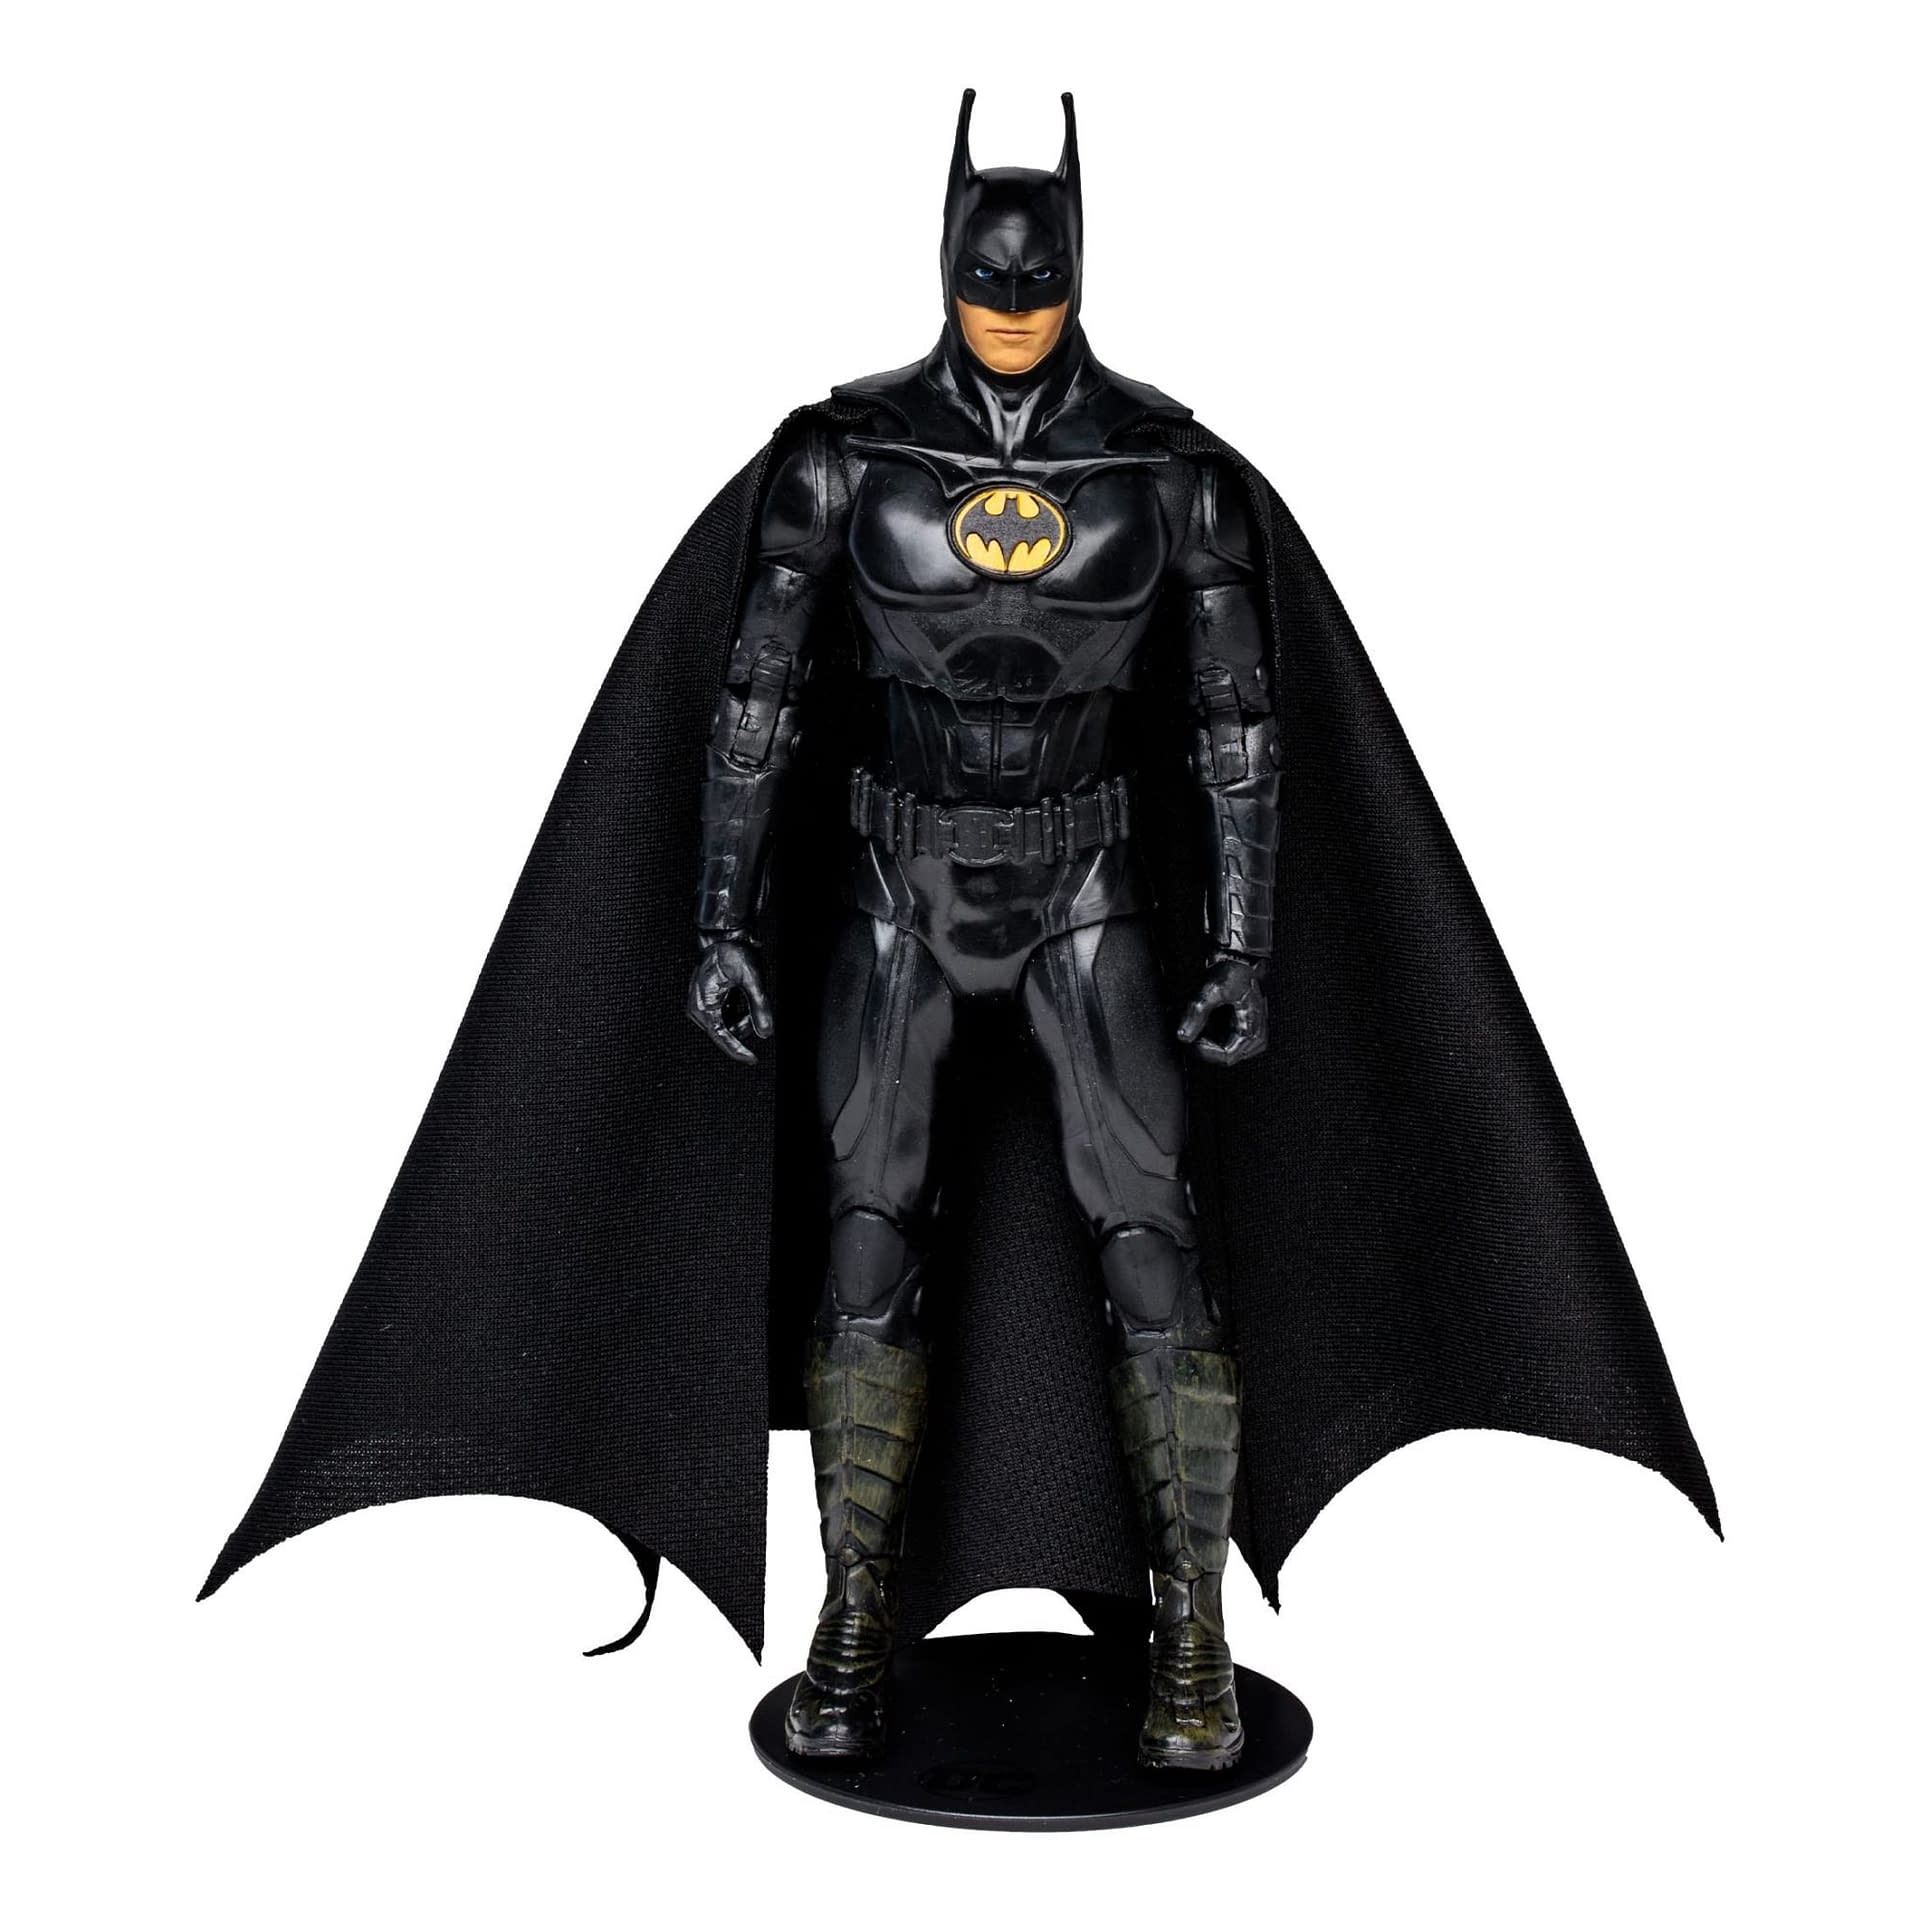 Keaton Batman The Flash Figure Coming Soon from McFarlane Toys 